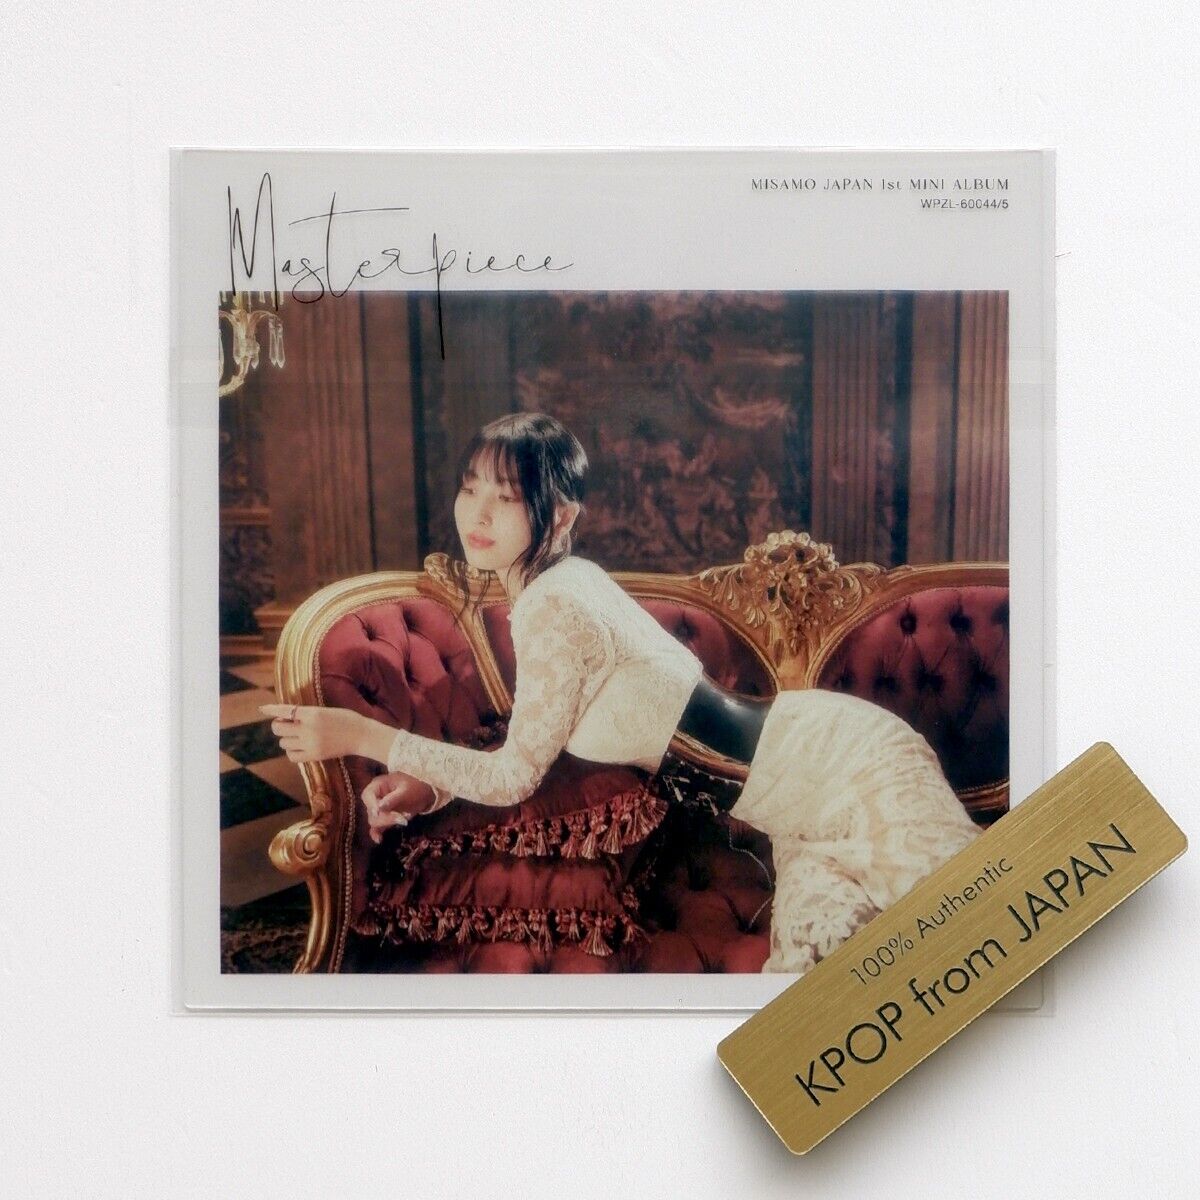 MOMO MISAMO Masterpiece Solo CD + DVD + Photocard Postcard Polaroid set  TWICE